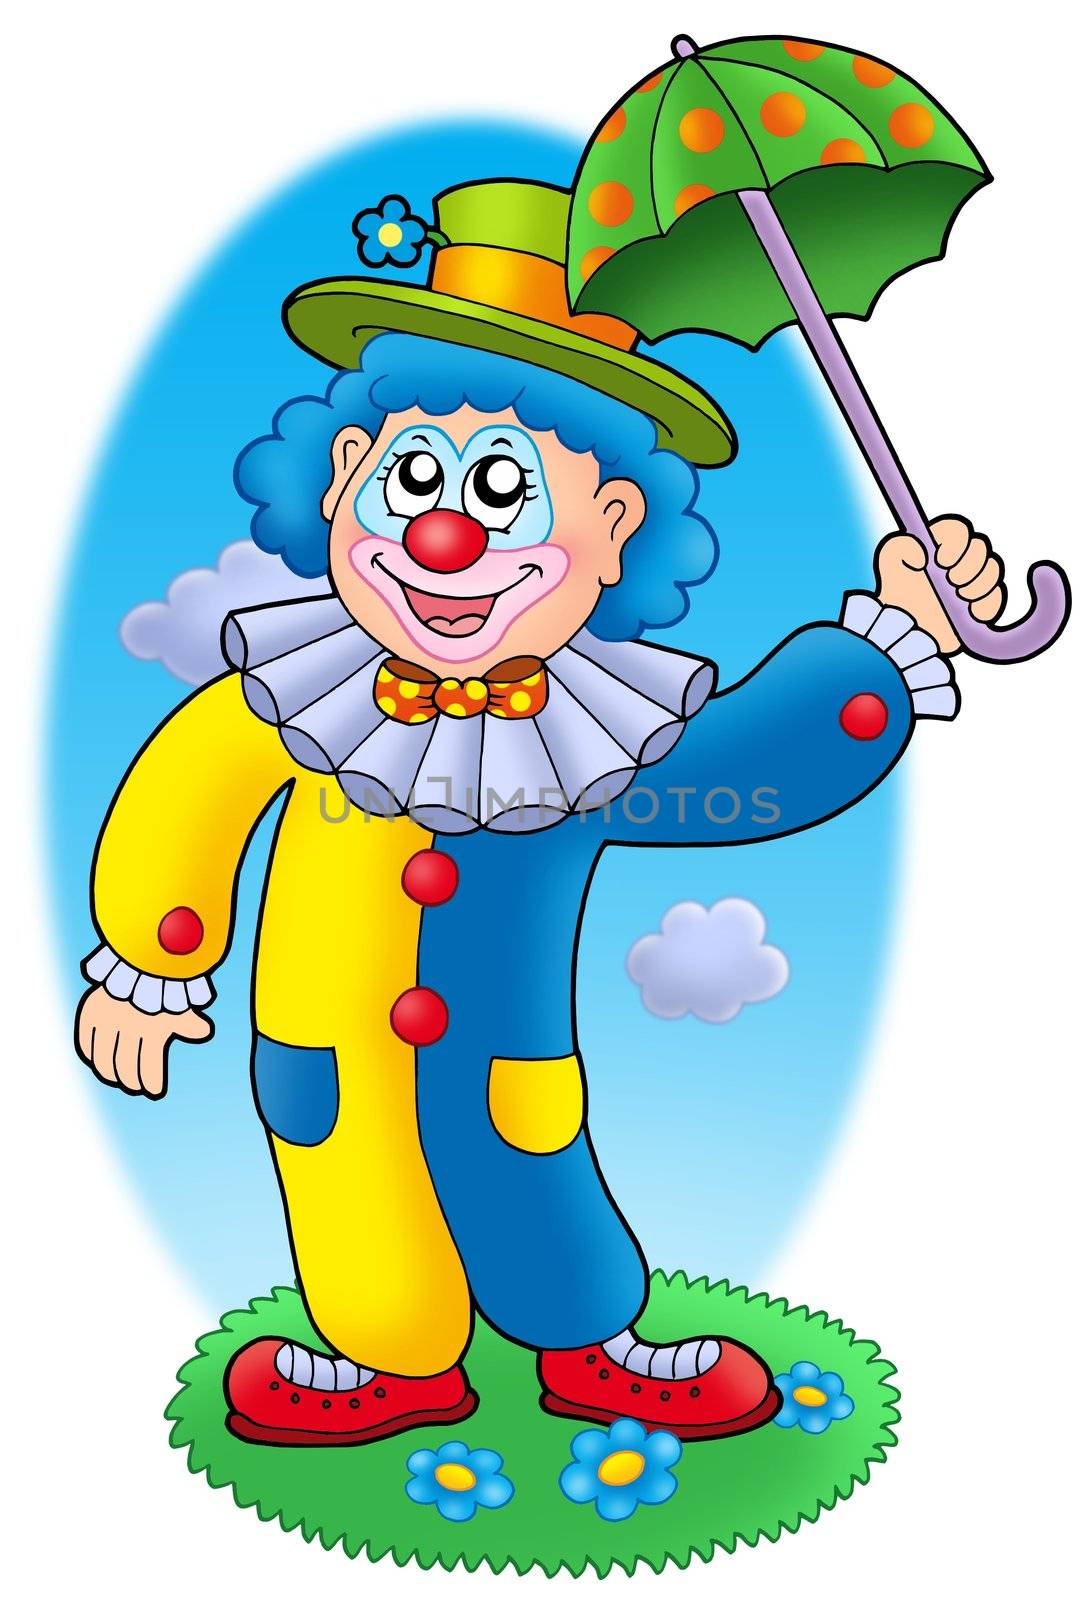 Cartoon clown holding umbrella - color illustration.